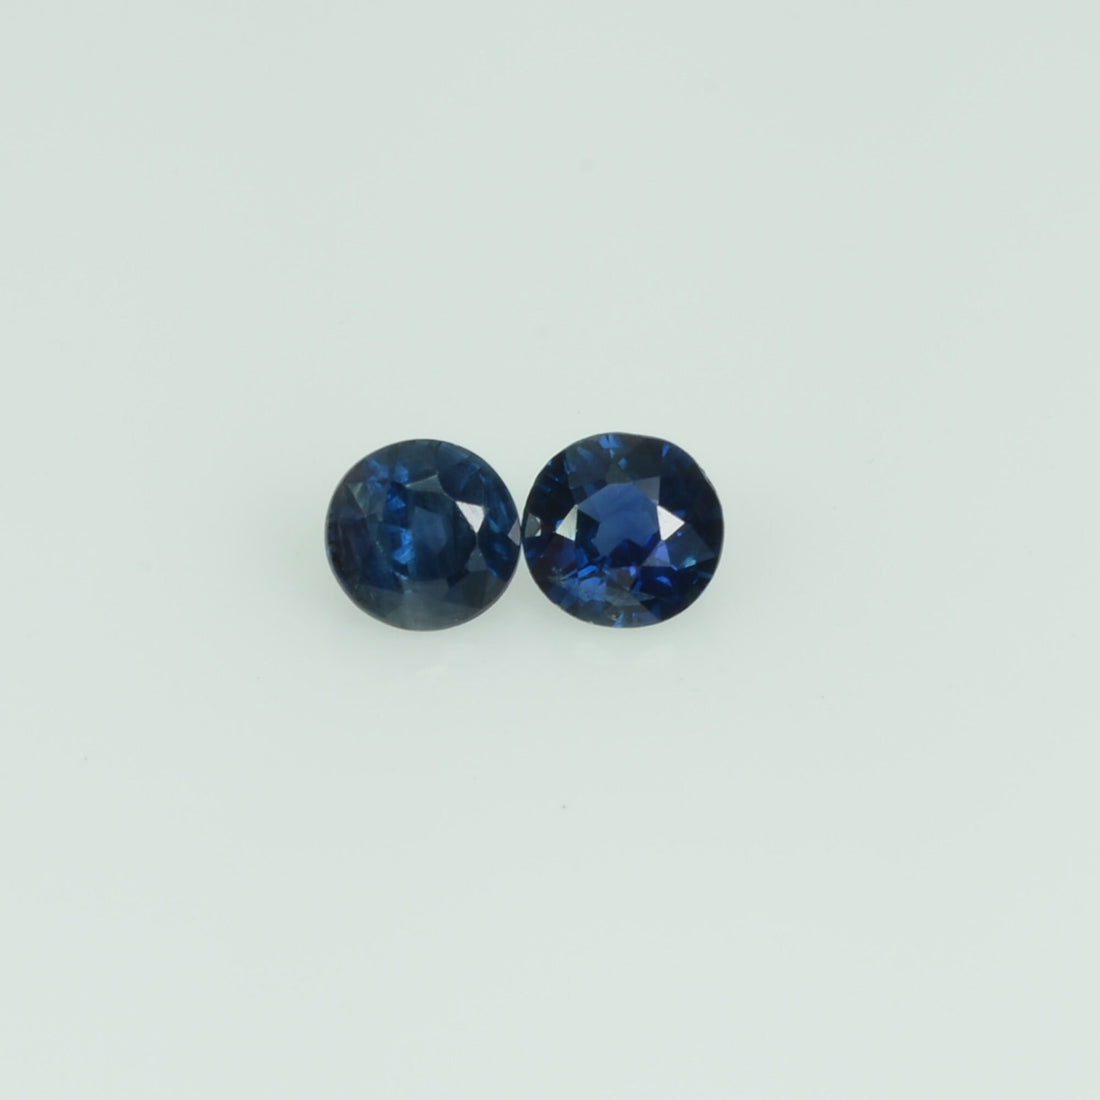 0.40 Cts Natural Blue Sapphire Loose Pair Gemstone Round Cut